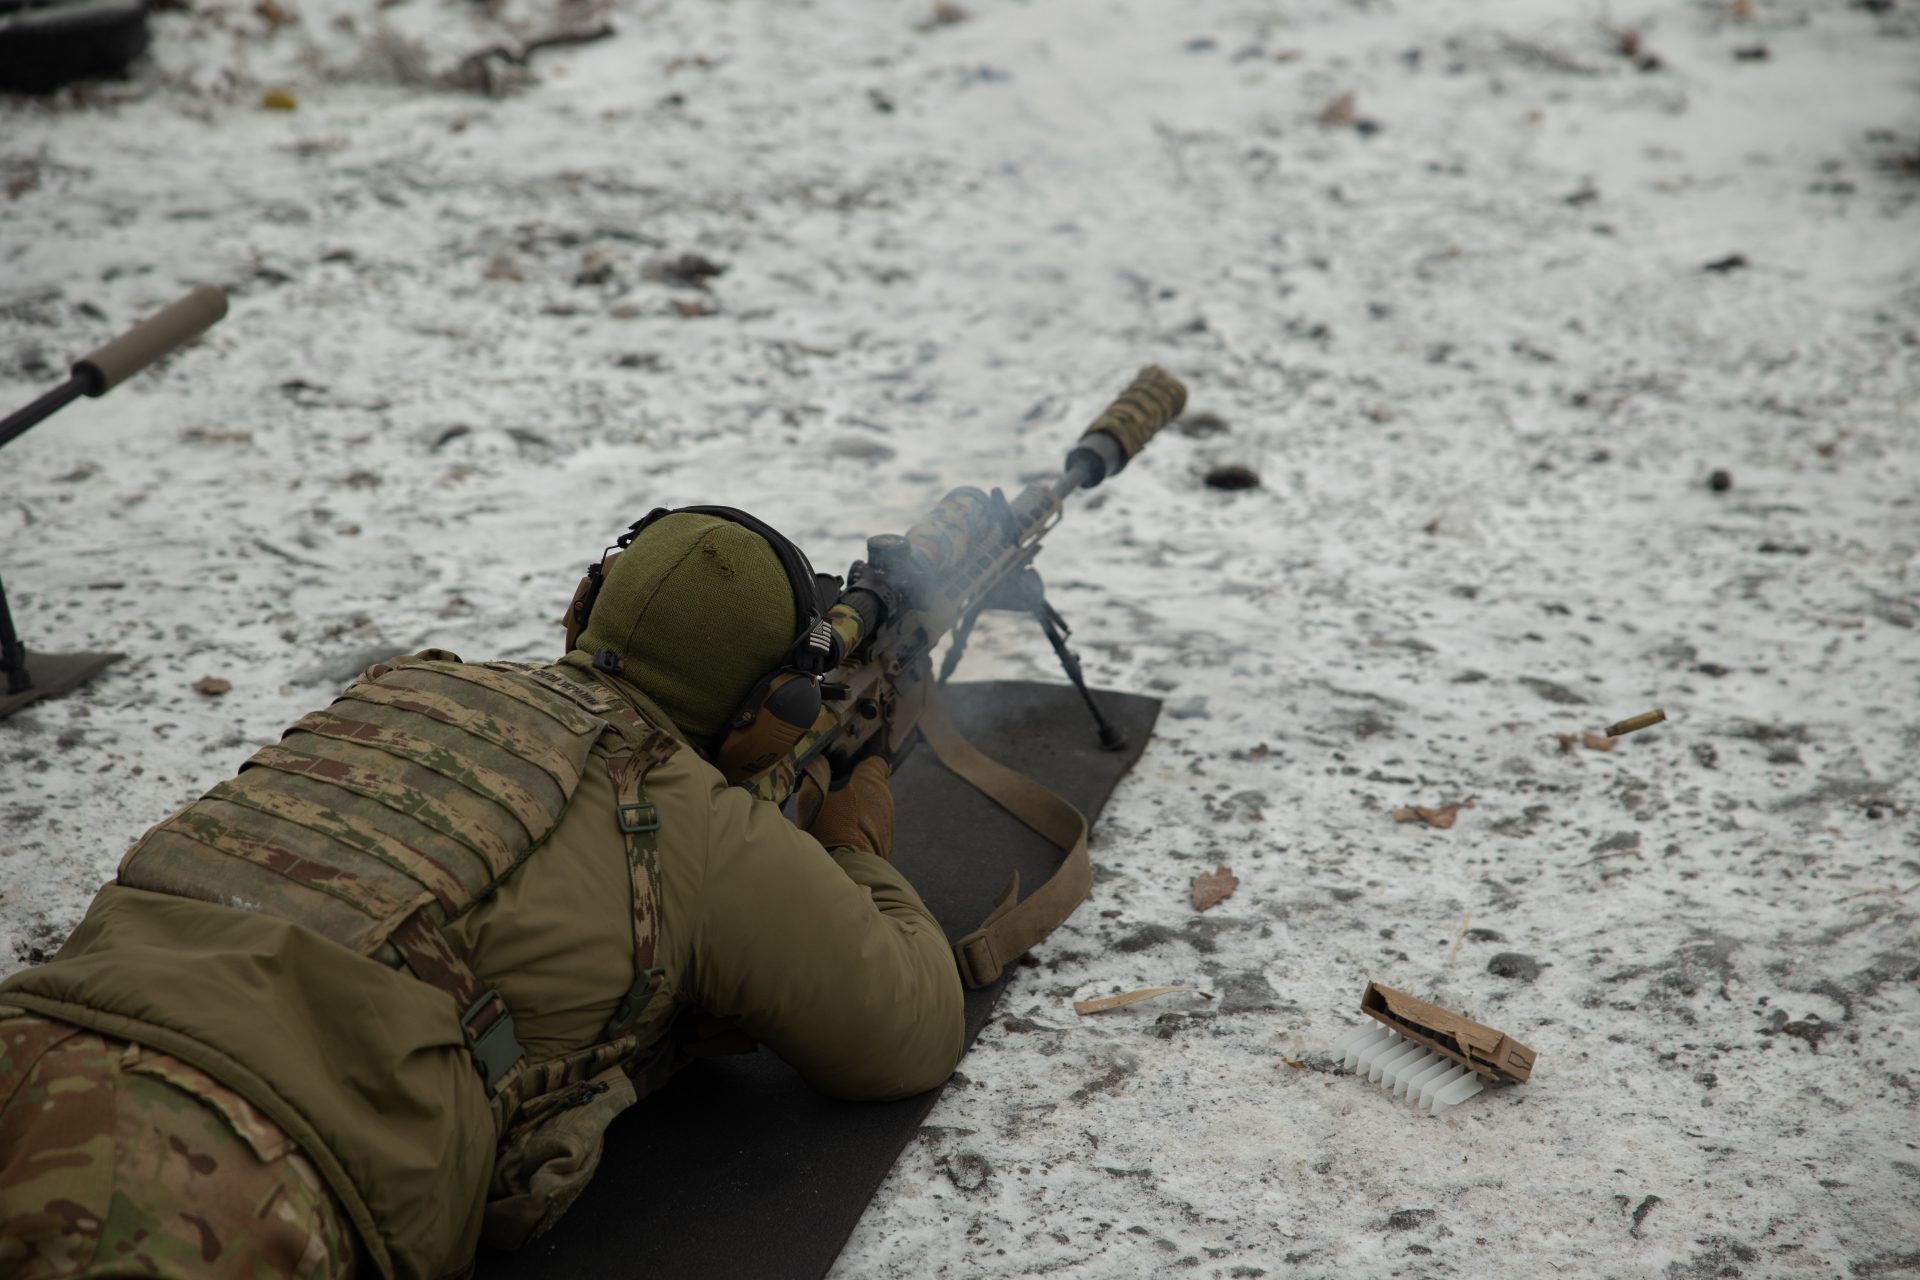 A Ukrainian sniper broke the world record for longest kill shot